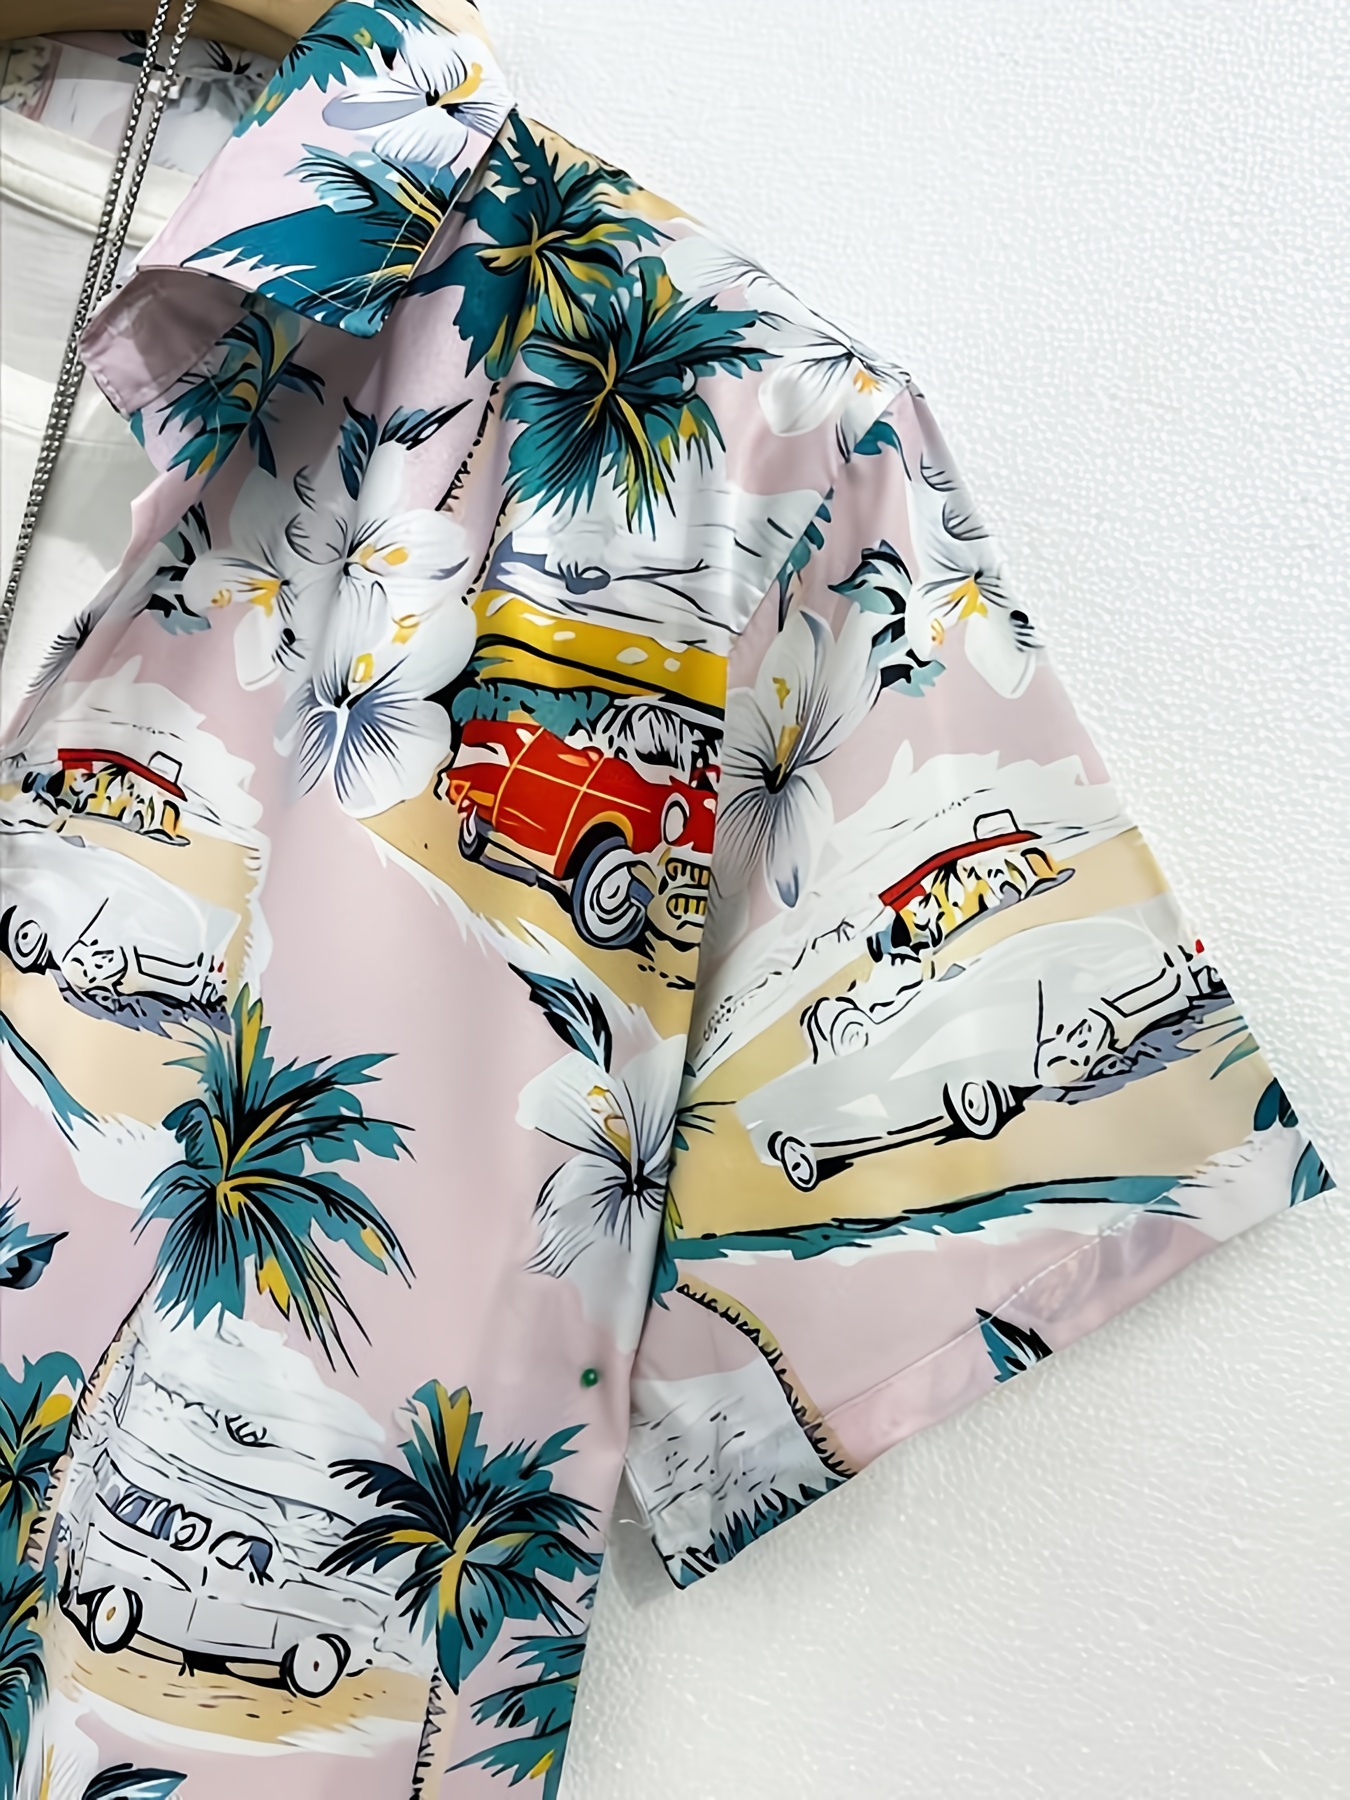 coconut tree vintage car print mens casual short sleeve shirt mens shirt for summer vacation resort details 3